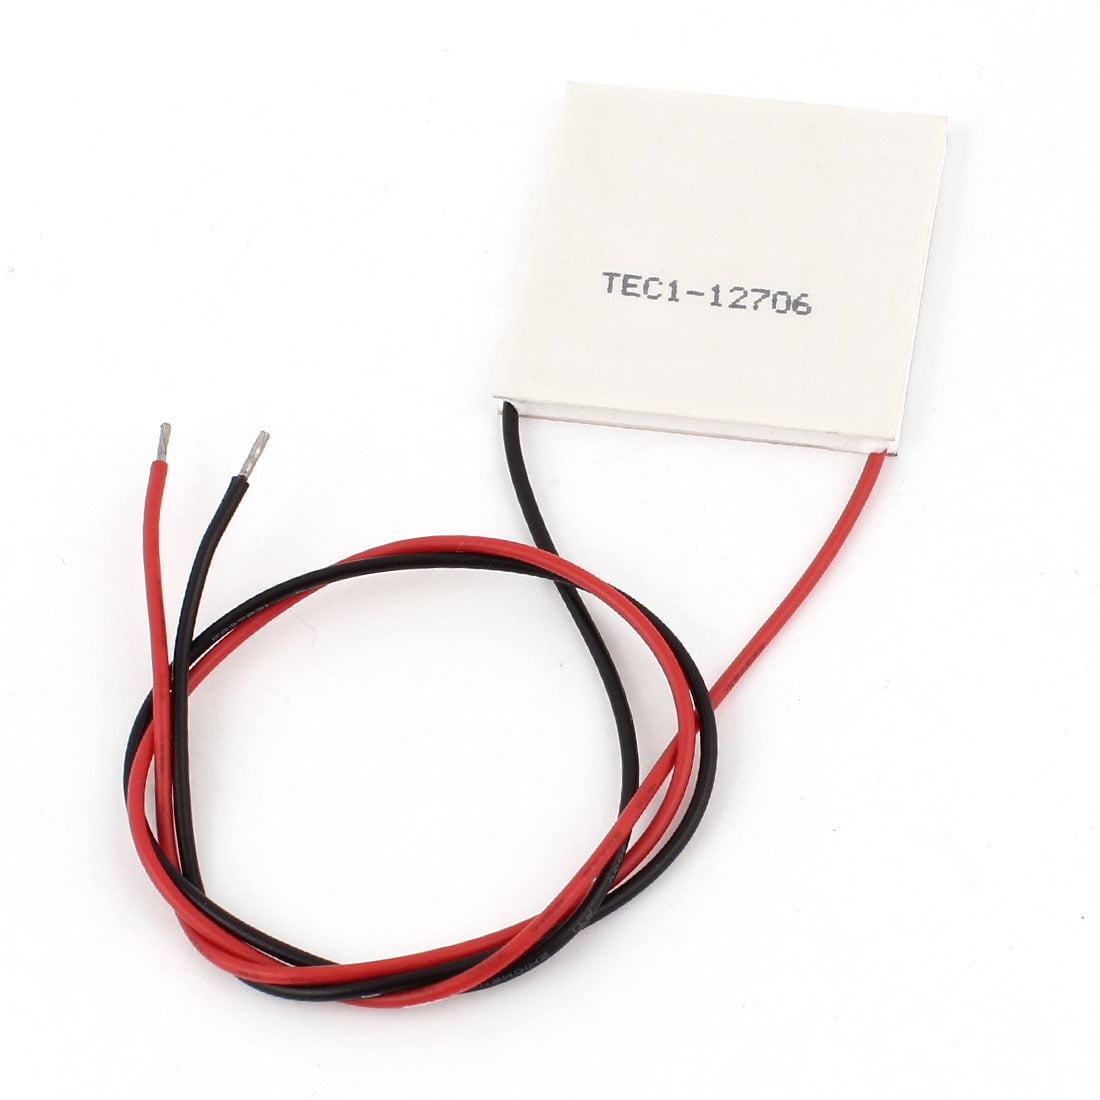 10X TEC1-12706 12V Heatsink Thermoelectric Cooler Cooling Peltier Plate Module H 